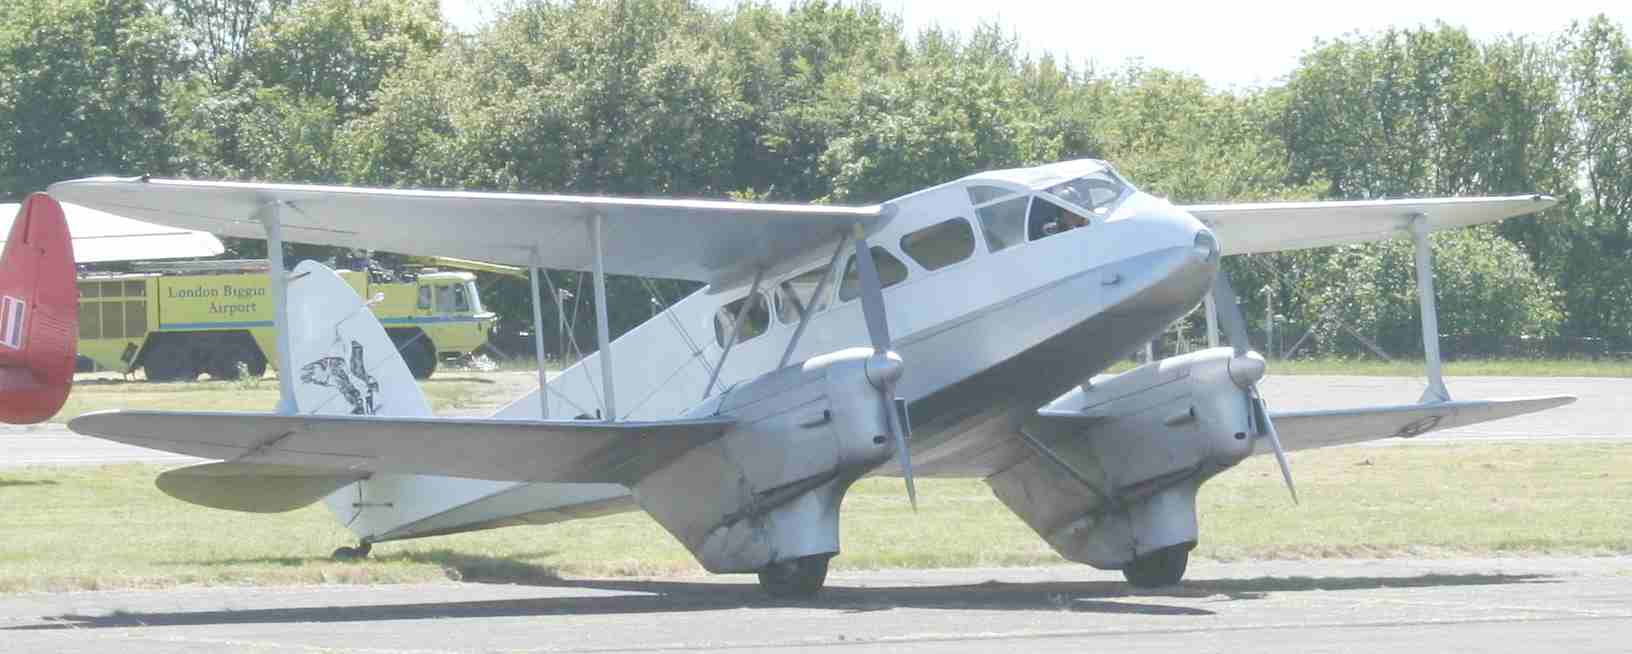 Biplane, twin engined petrol powered